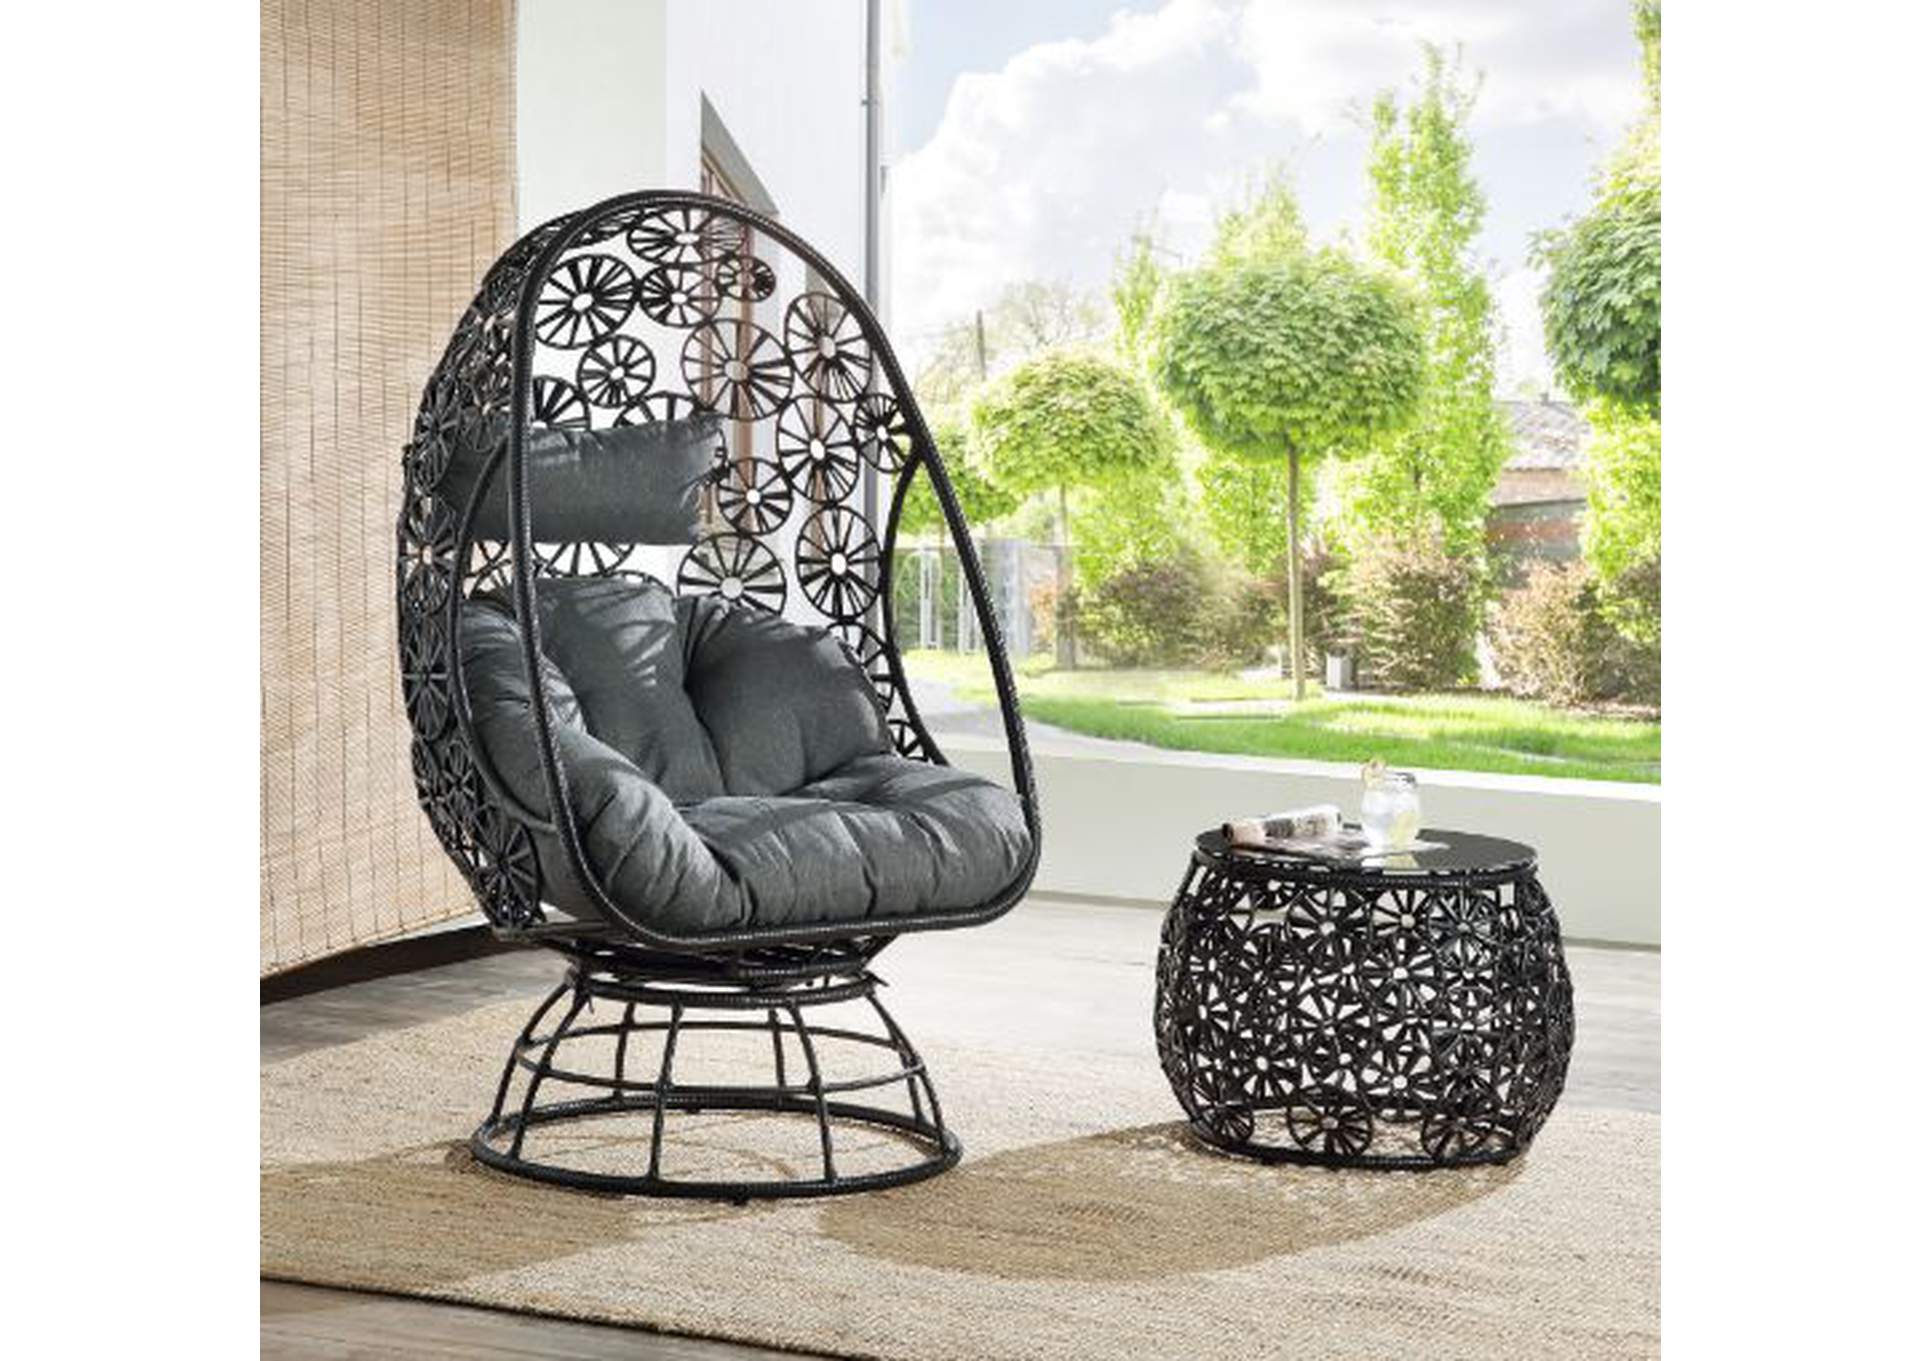 Hikre Clear Glass, Charcaol Fabric Black Wicker Patio Lounge Chair,Acme